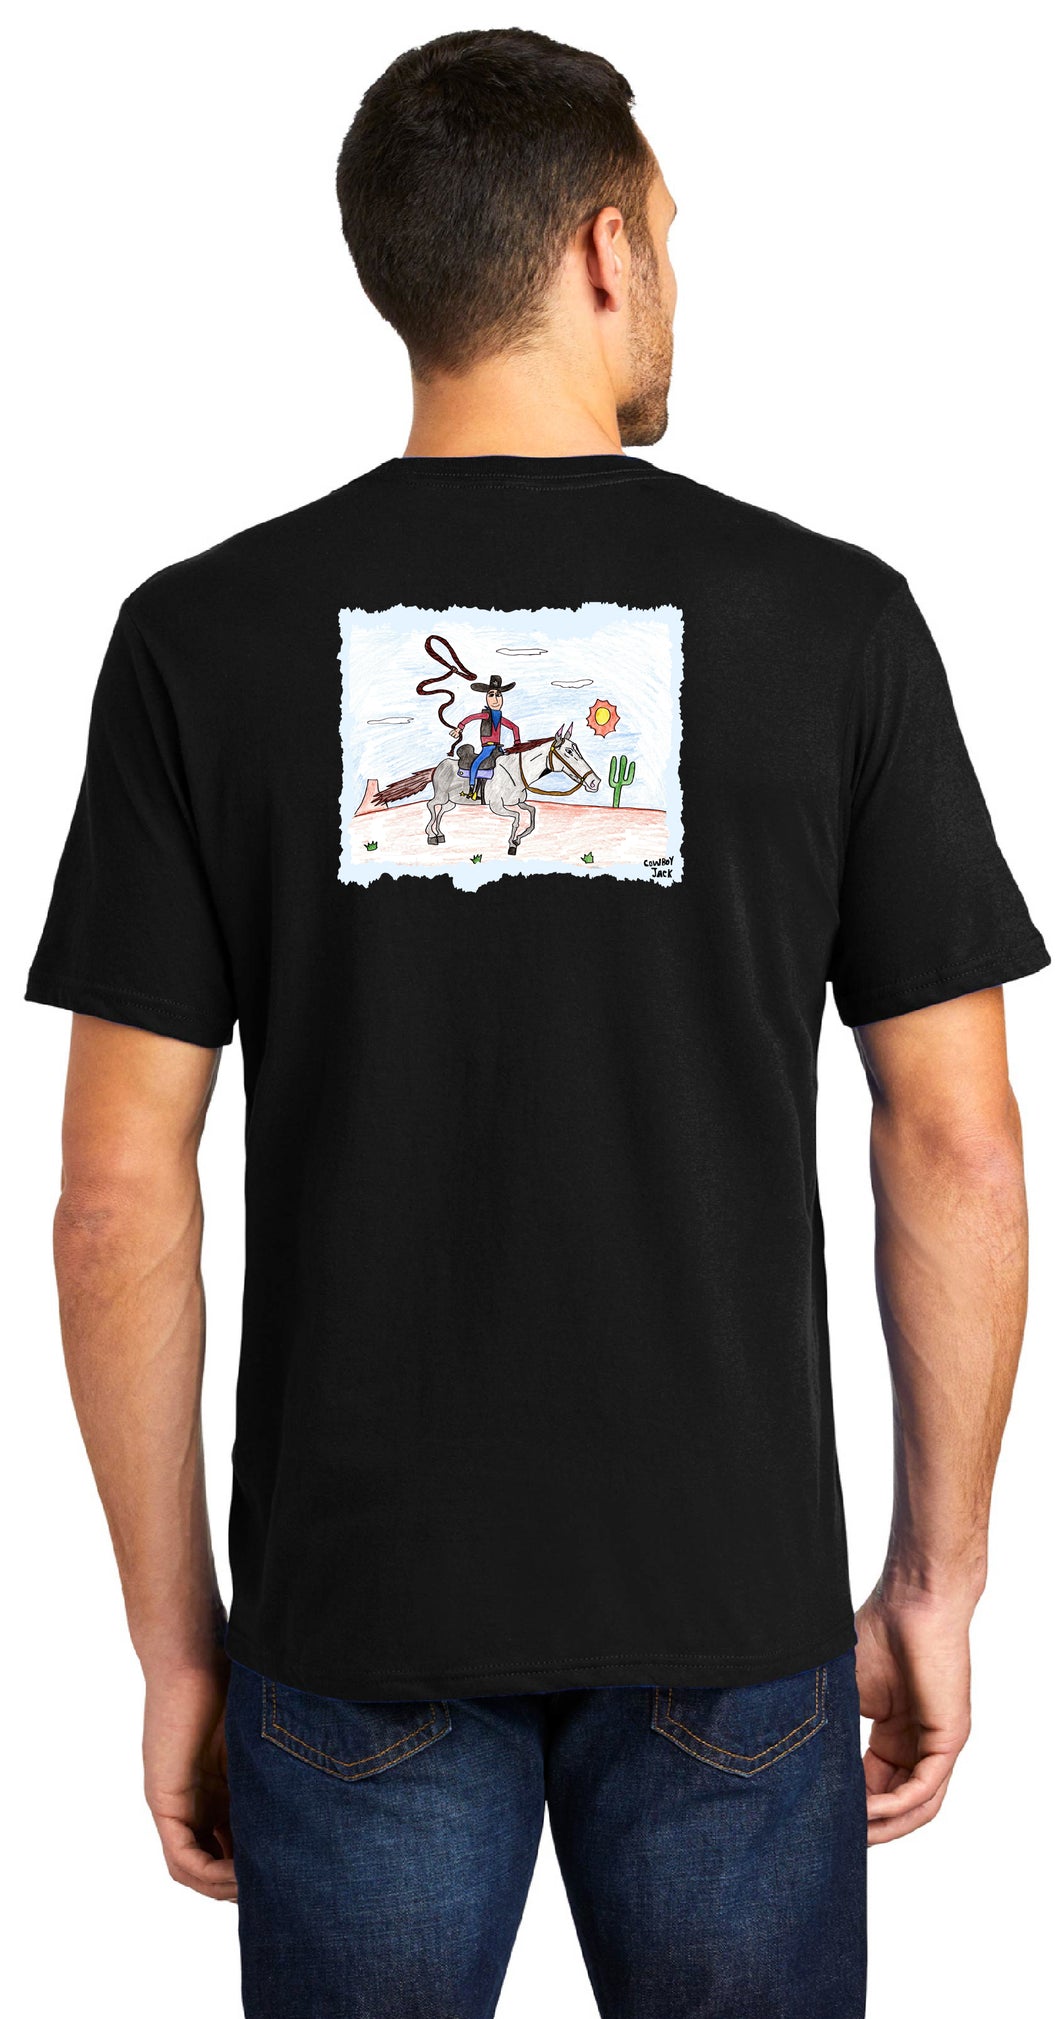 Cowboy with a Lasso T-Shirt